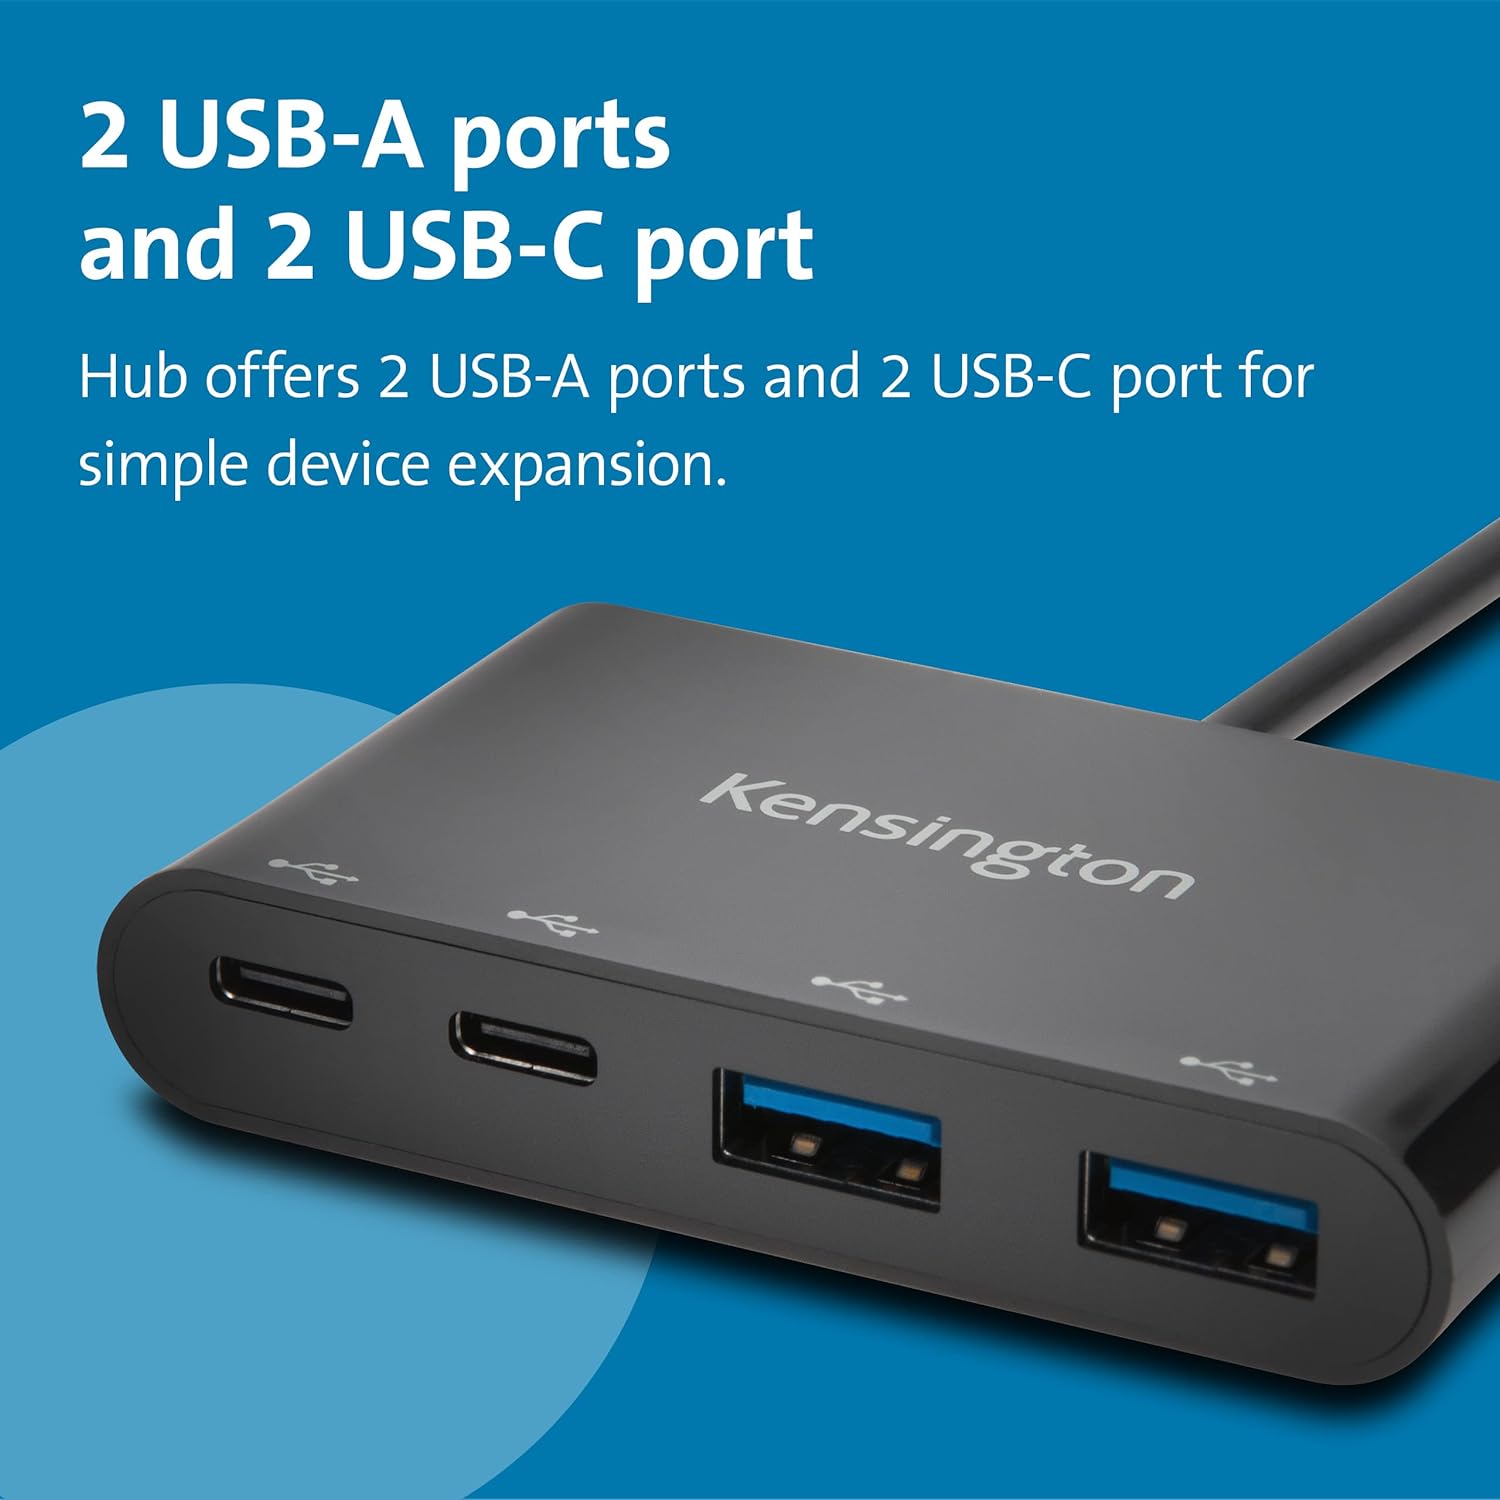 Kensington CH1000 USB-C 4-Port Hub